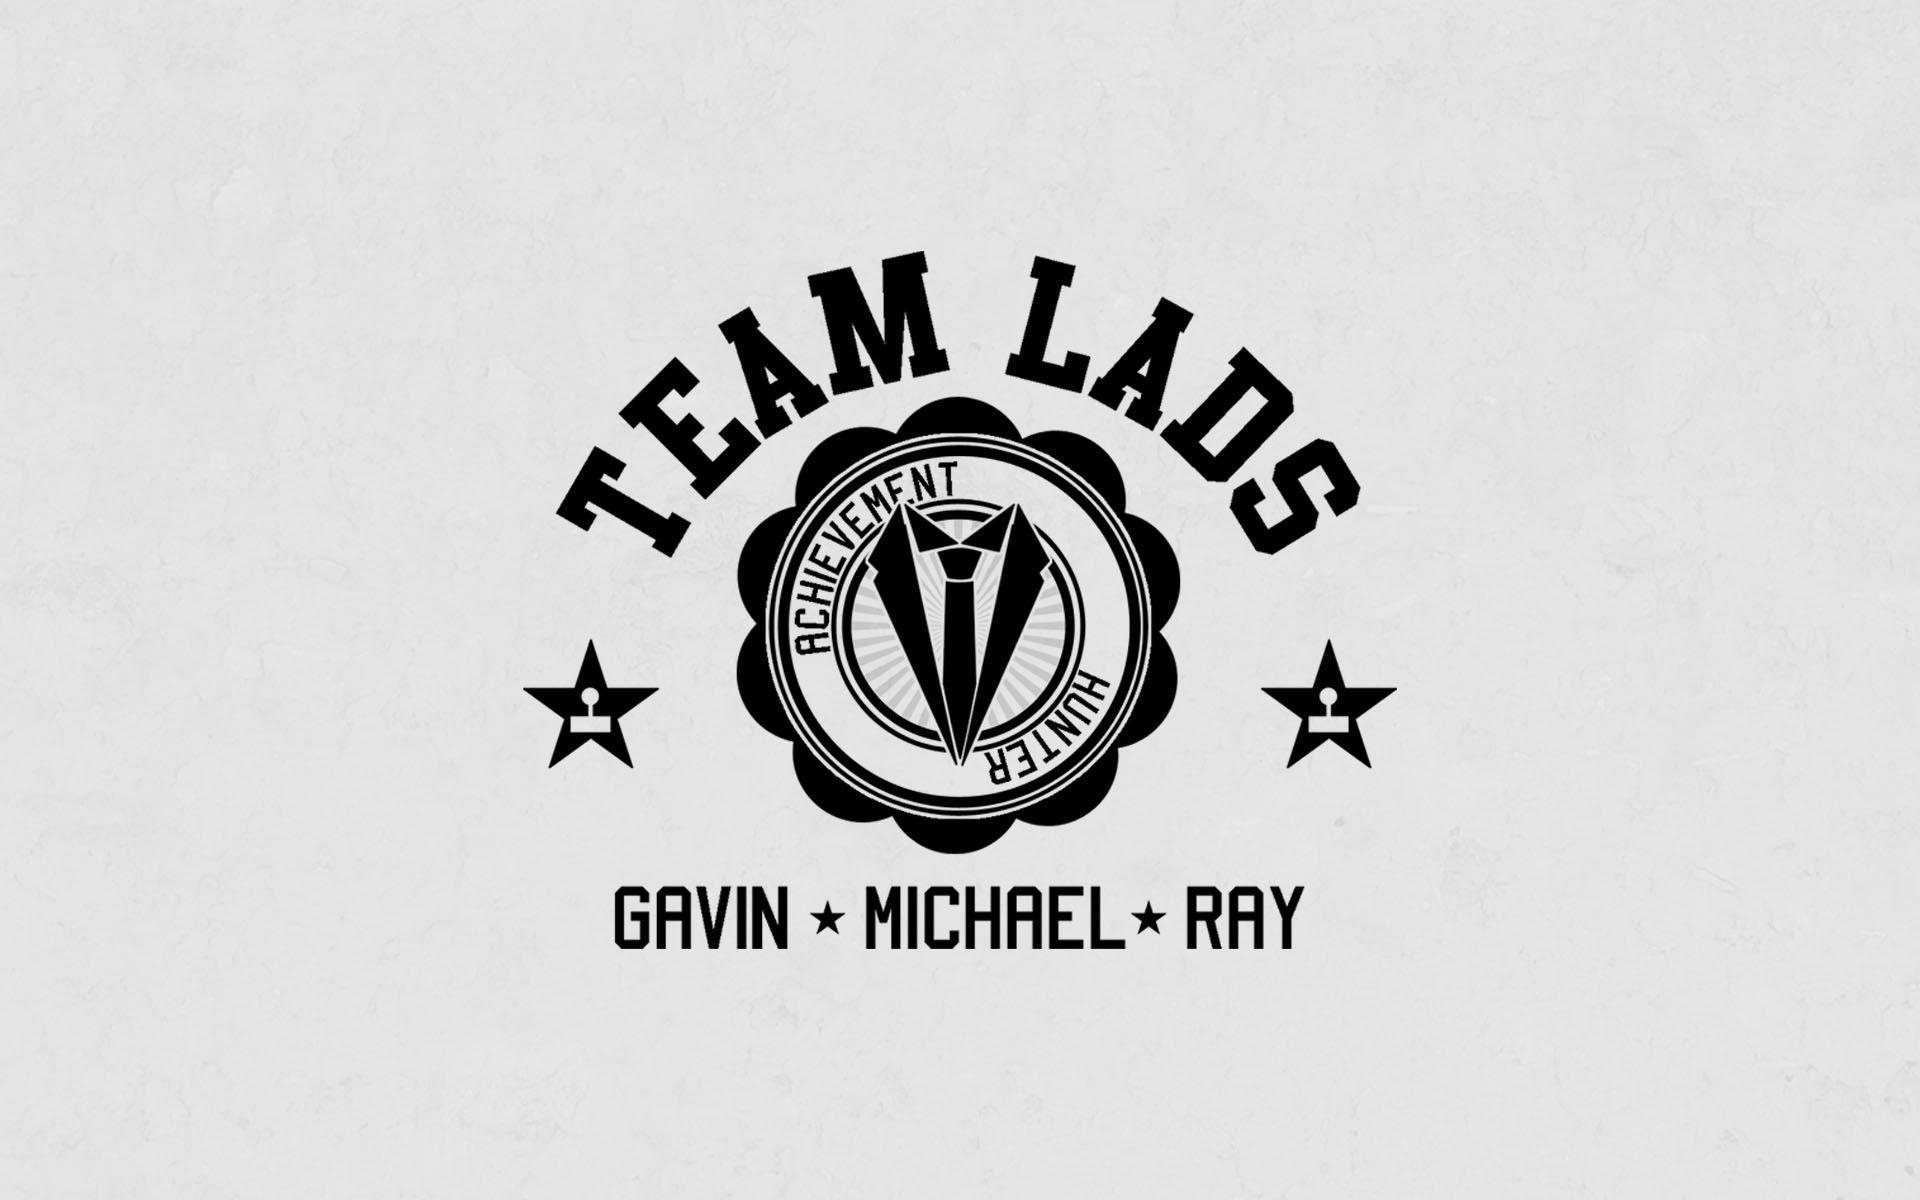 Team Lads Logo - Wallpaper : drawing, illustration, artwork, text, logo, brand ...